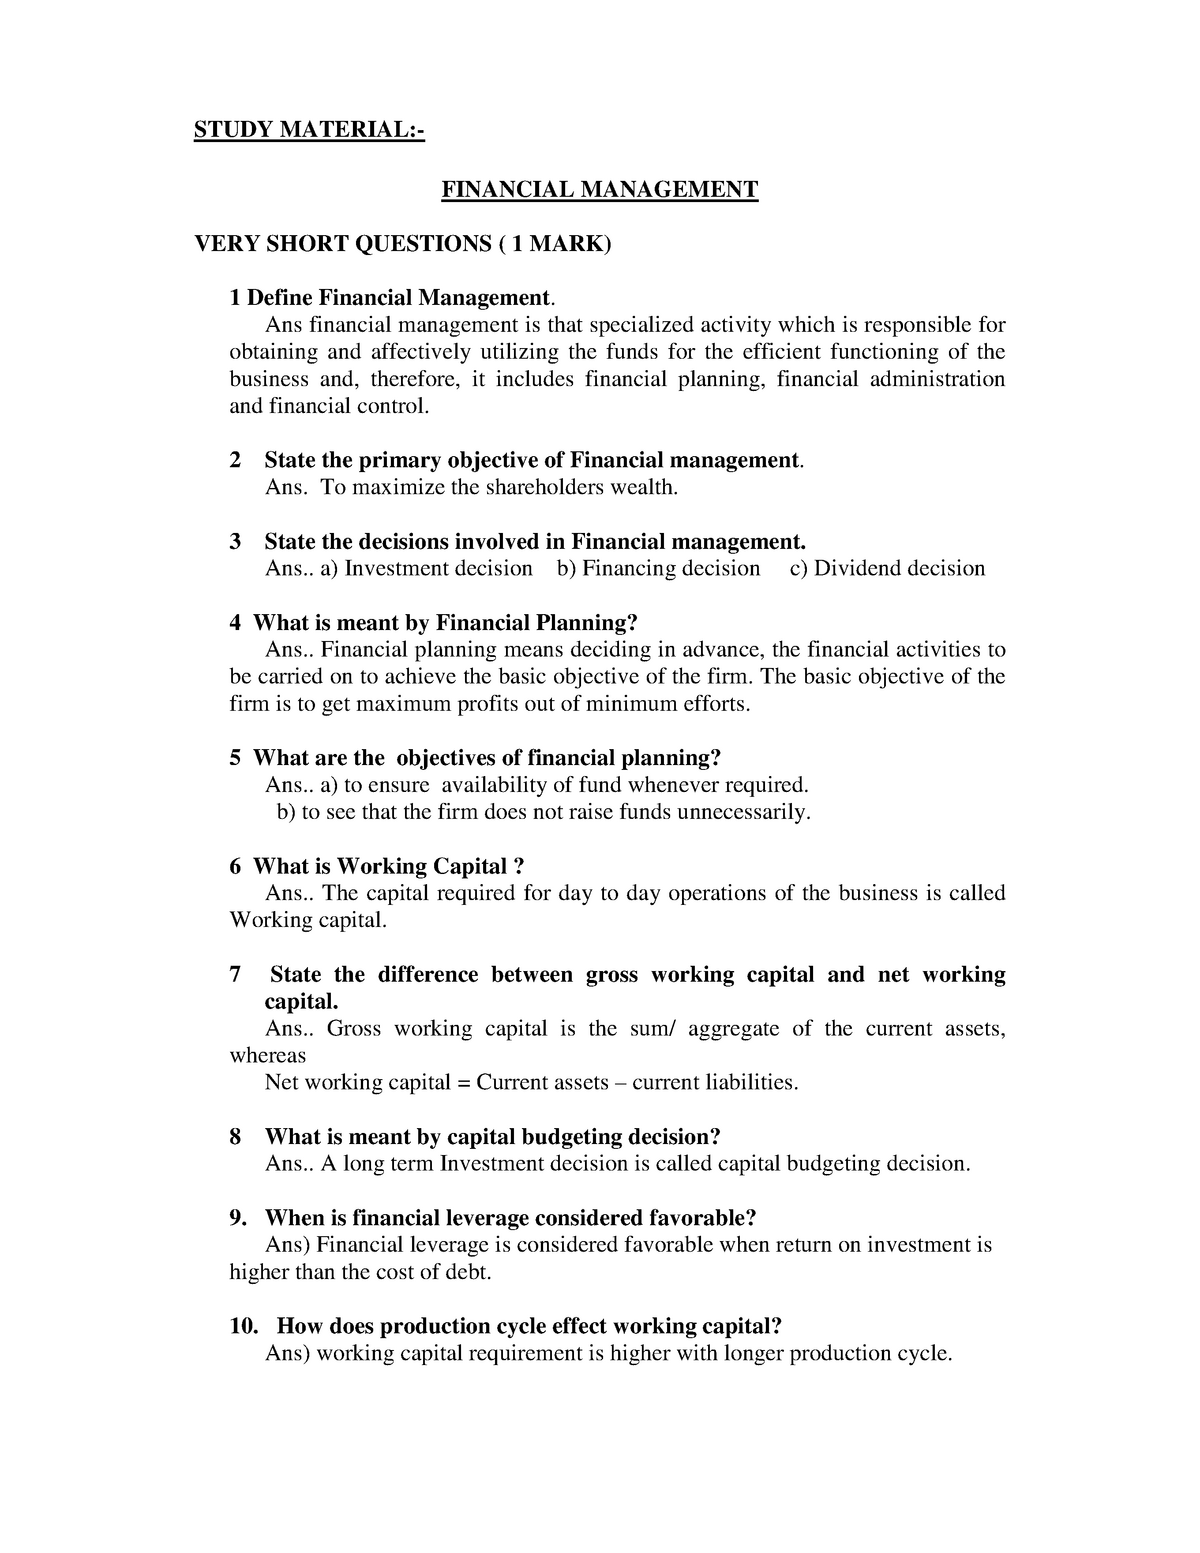 essay questions about financial management